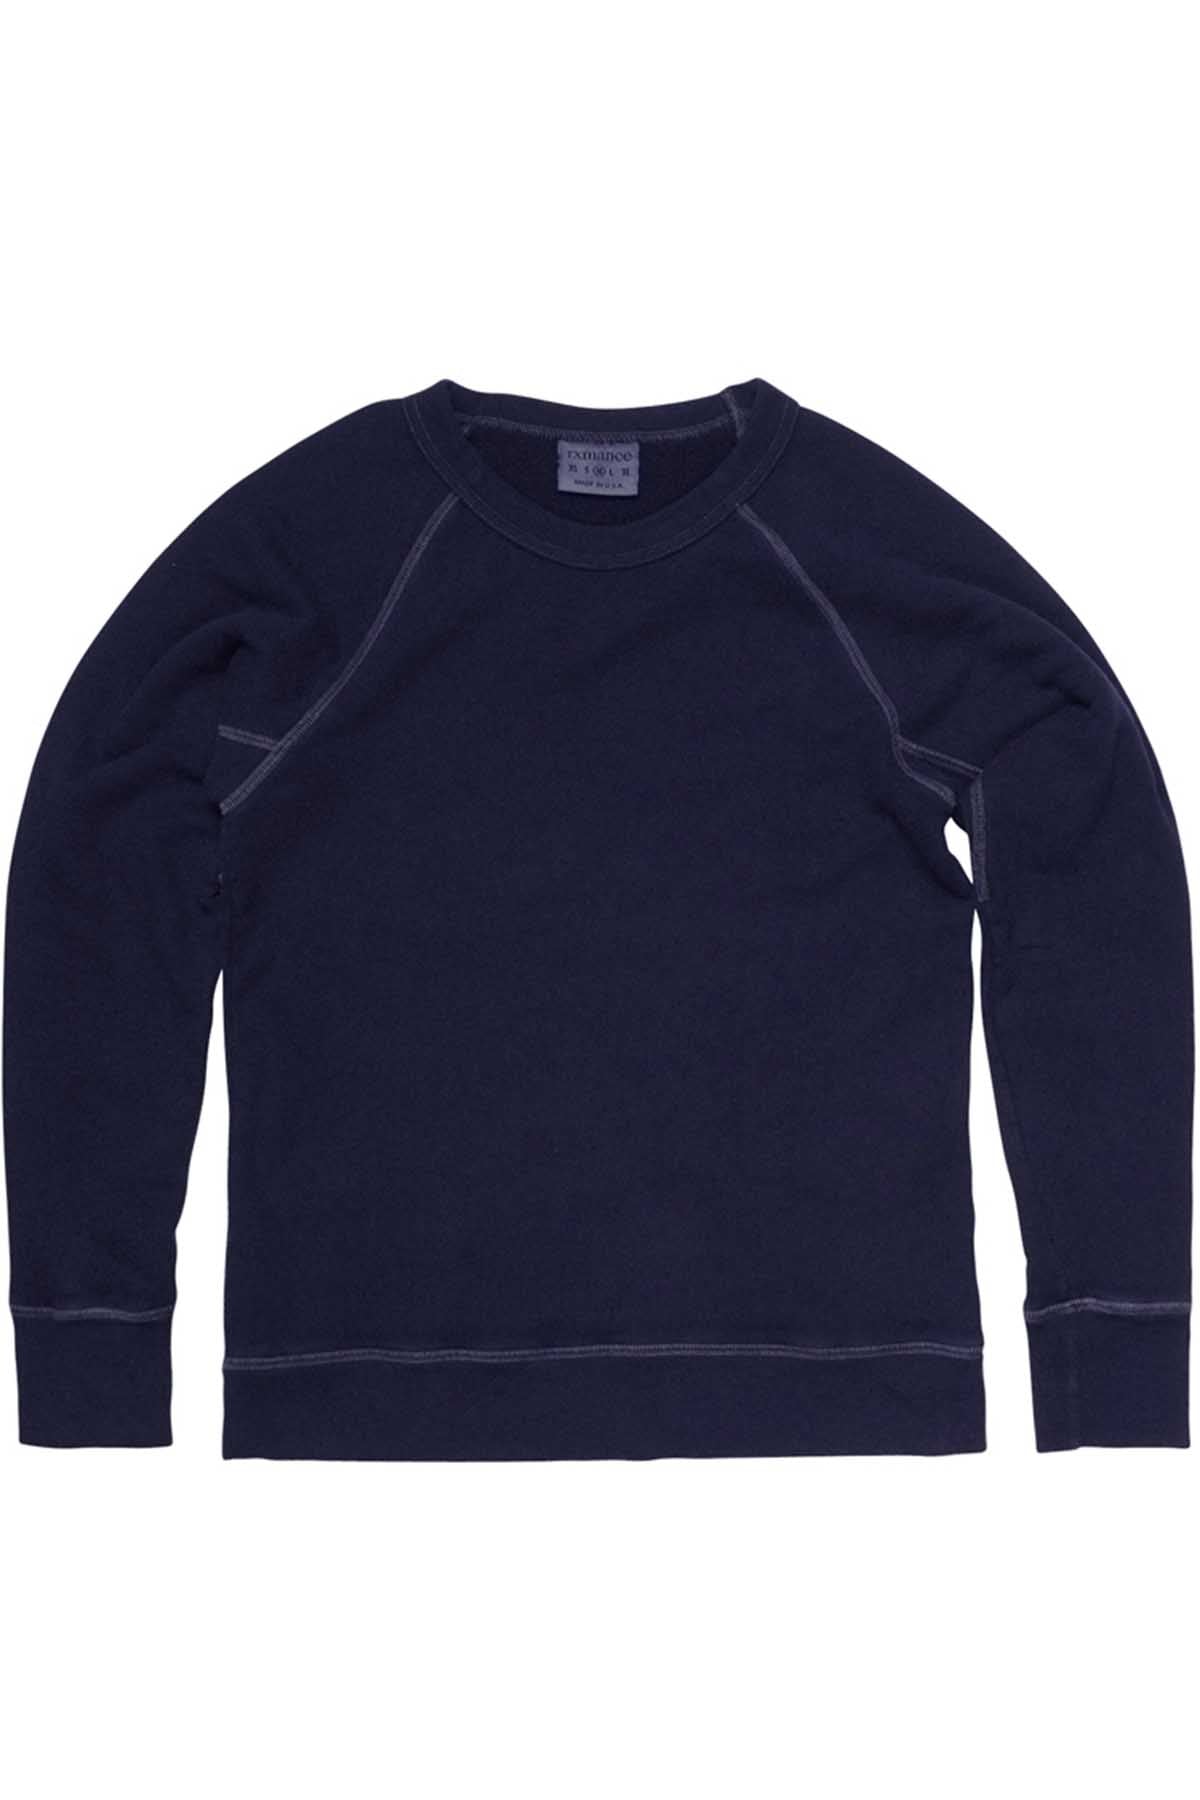 Rxmance Unisex Night Blue Sweatshirt